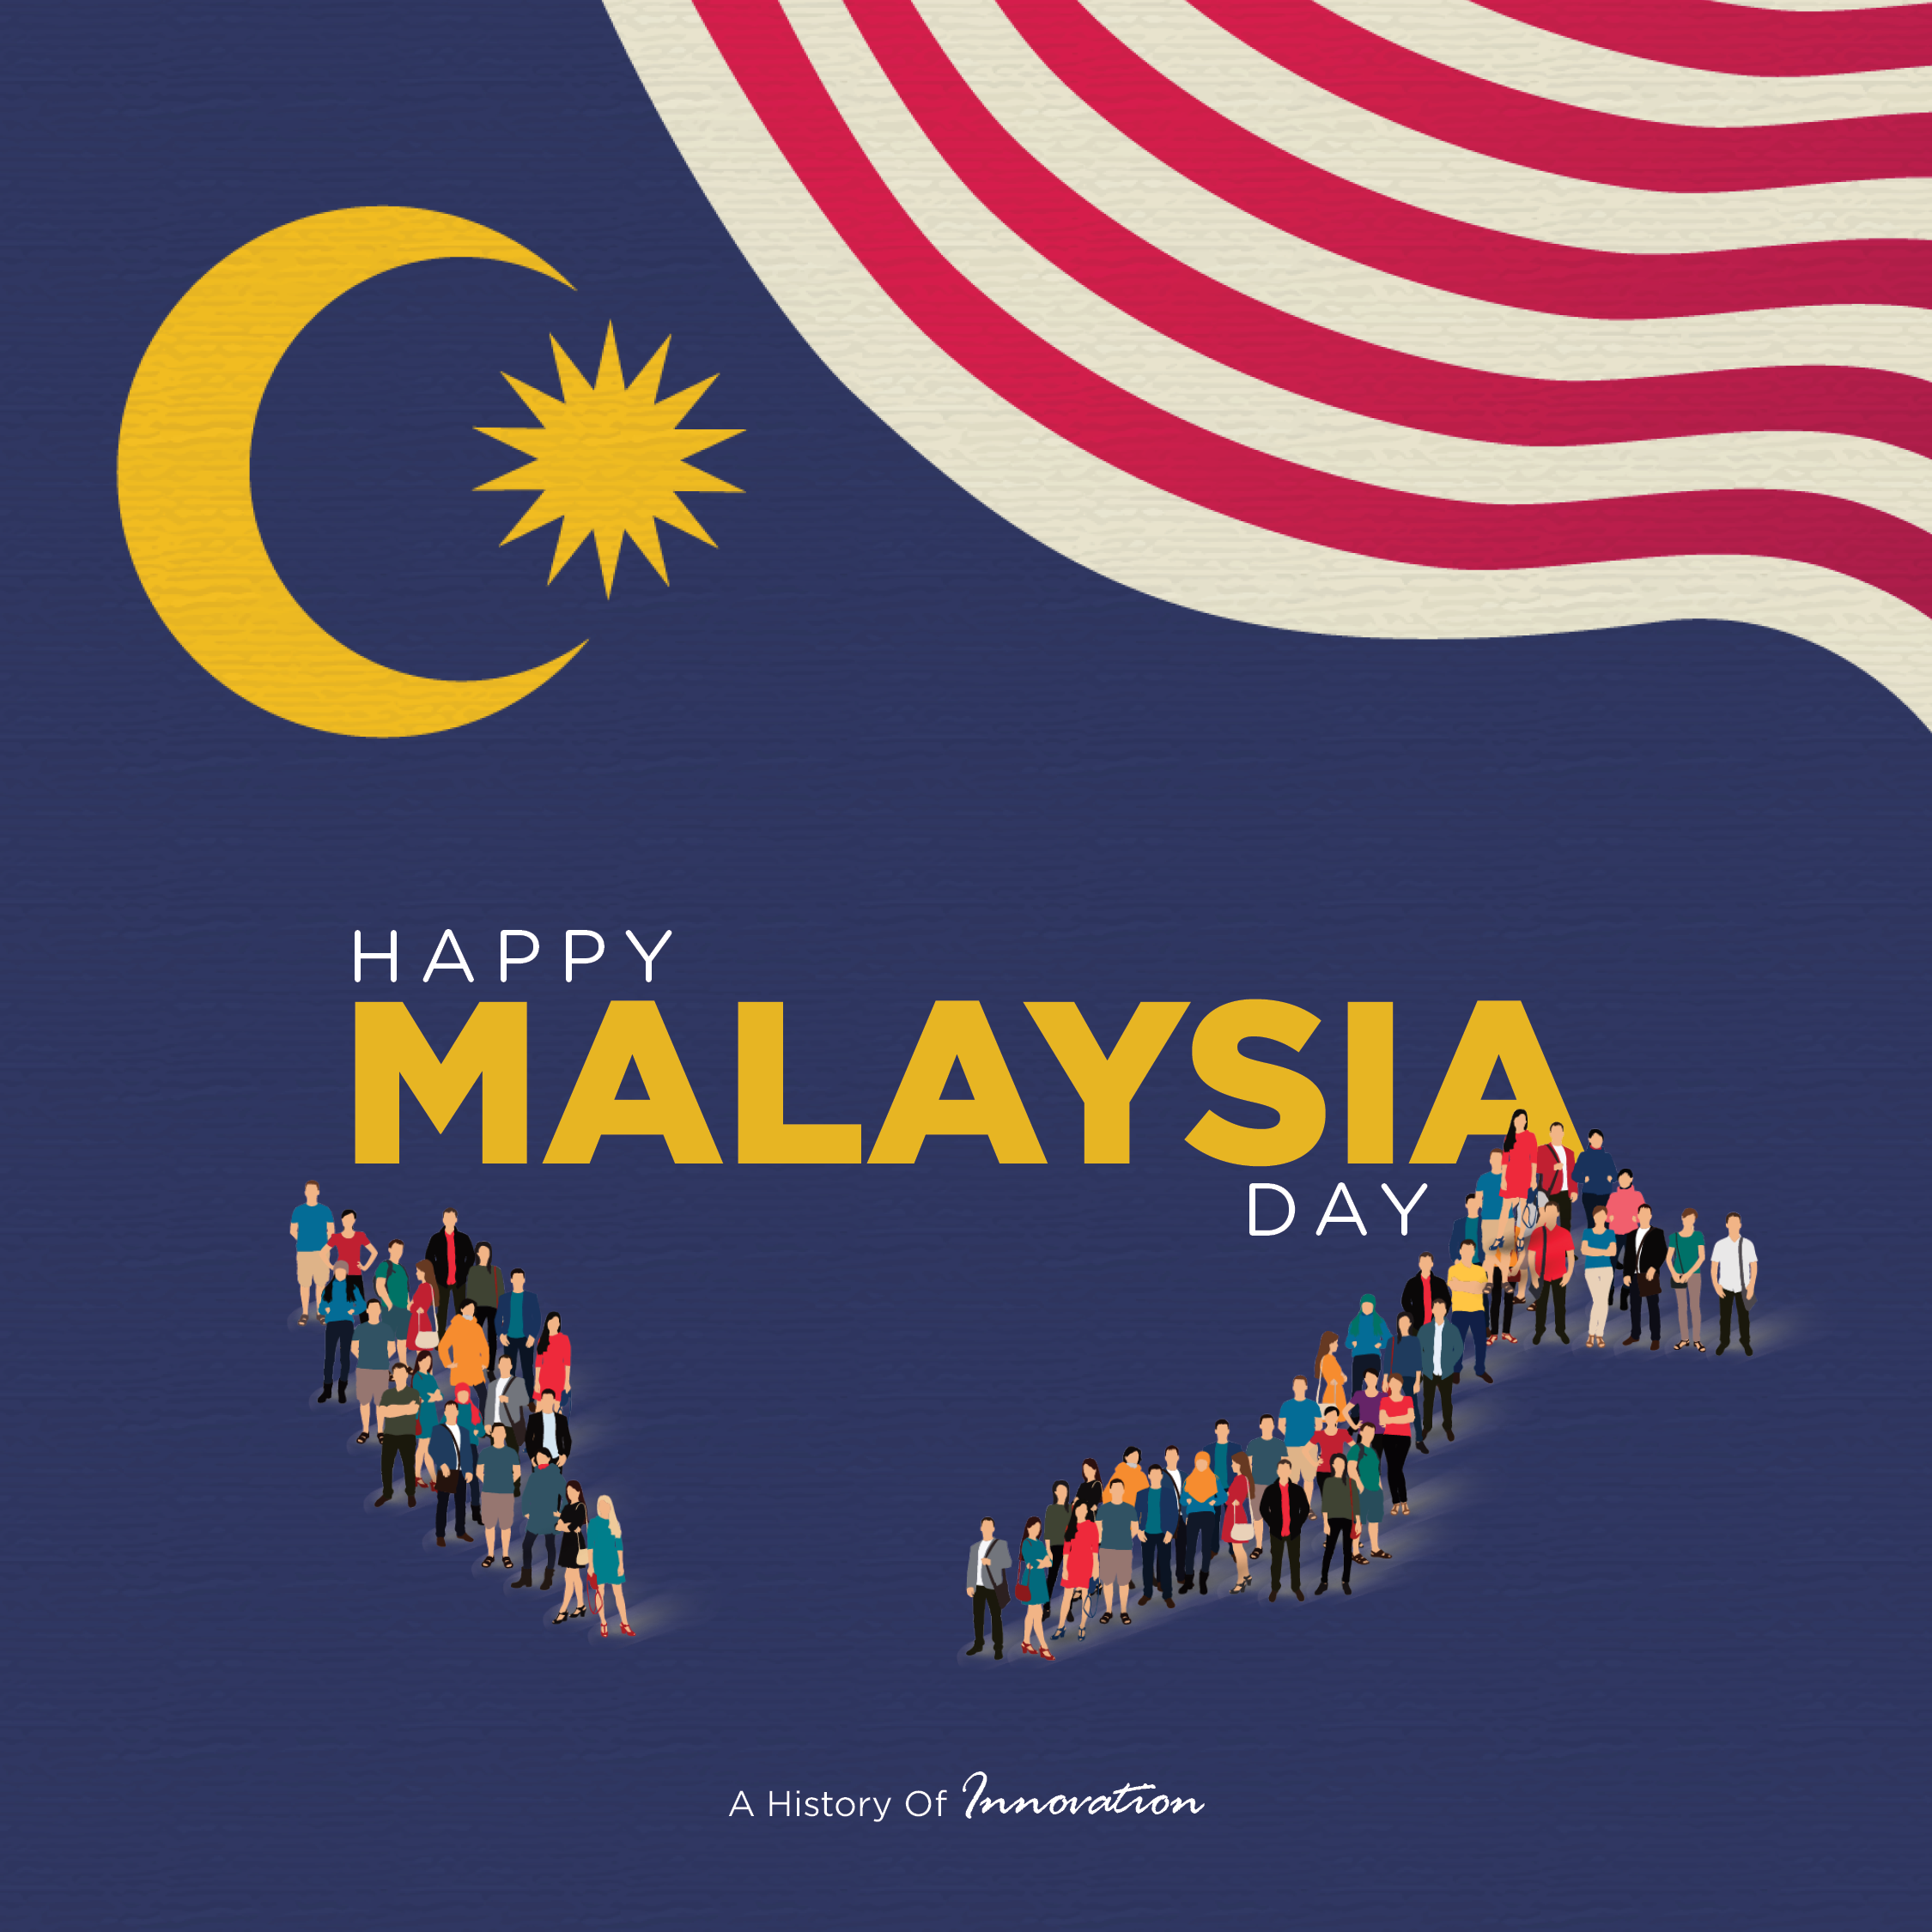 Celebrating our diversity! Malaysia